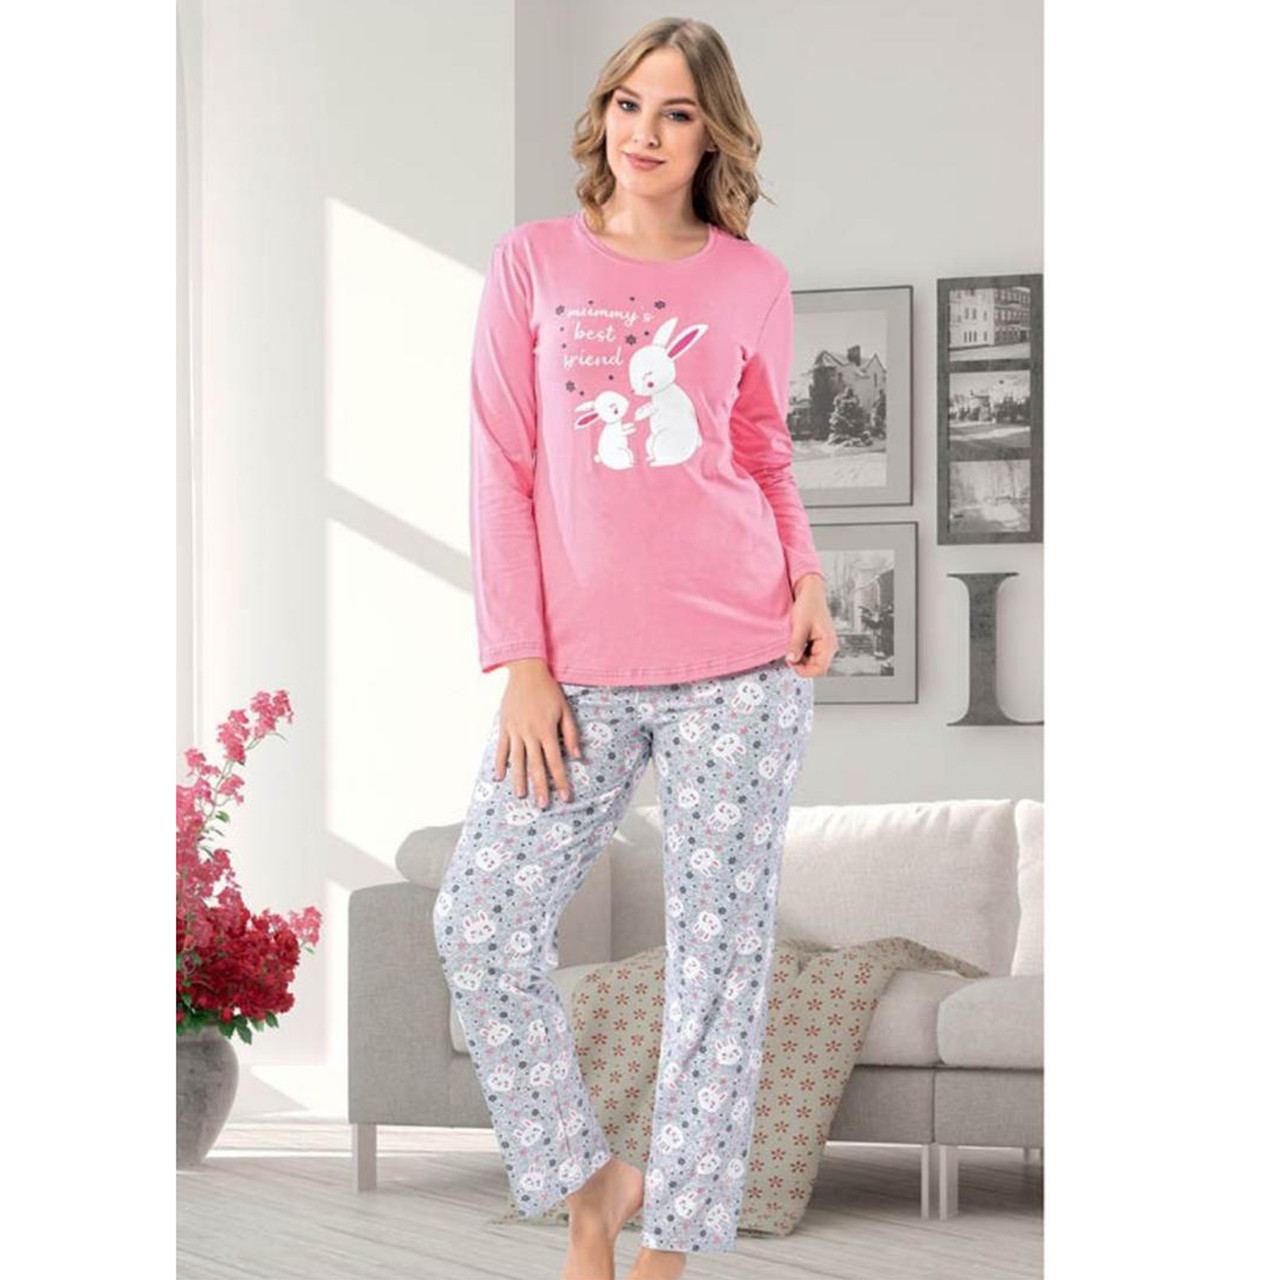 

Пижама для девушек брючная для сна трикотажная хлопковая S-XL M